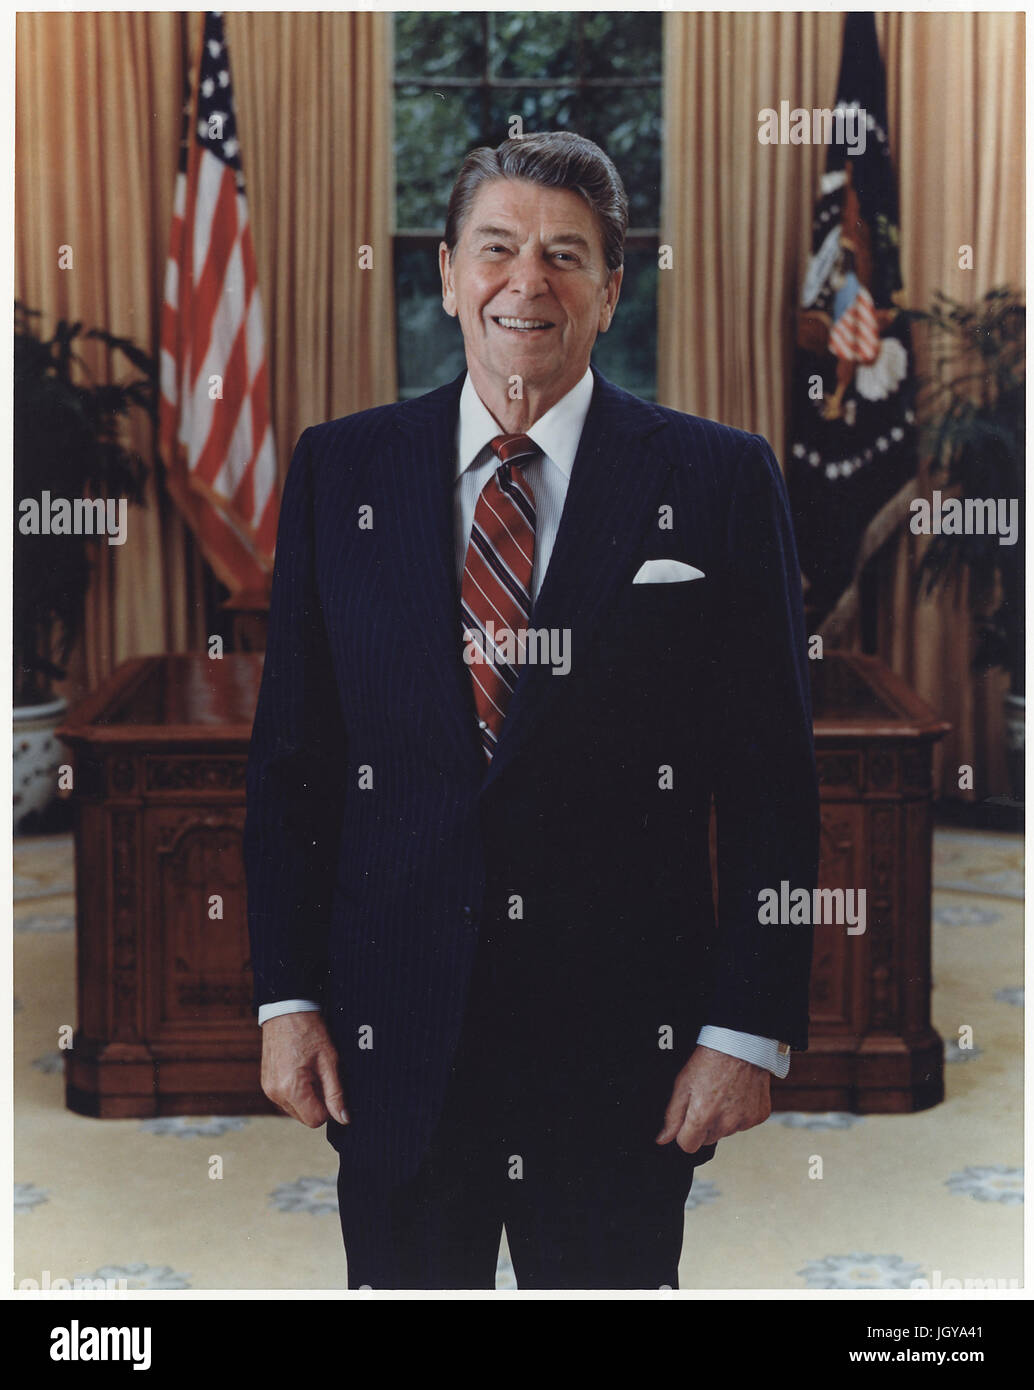 President Ronald Reagan 1981 Official White House Portrait Silver Halide Photo 